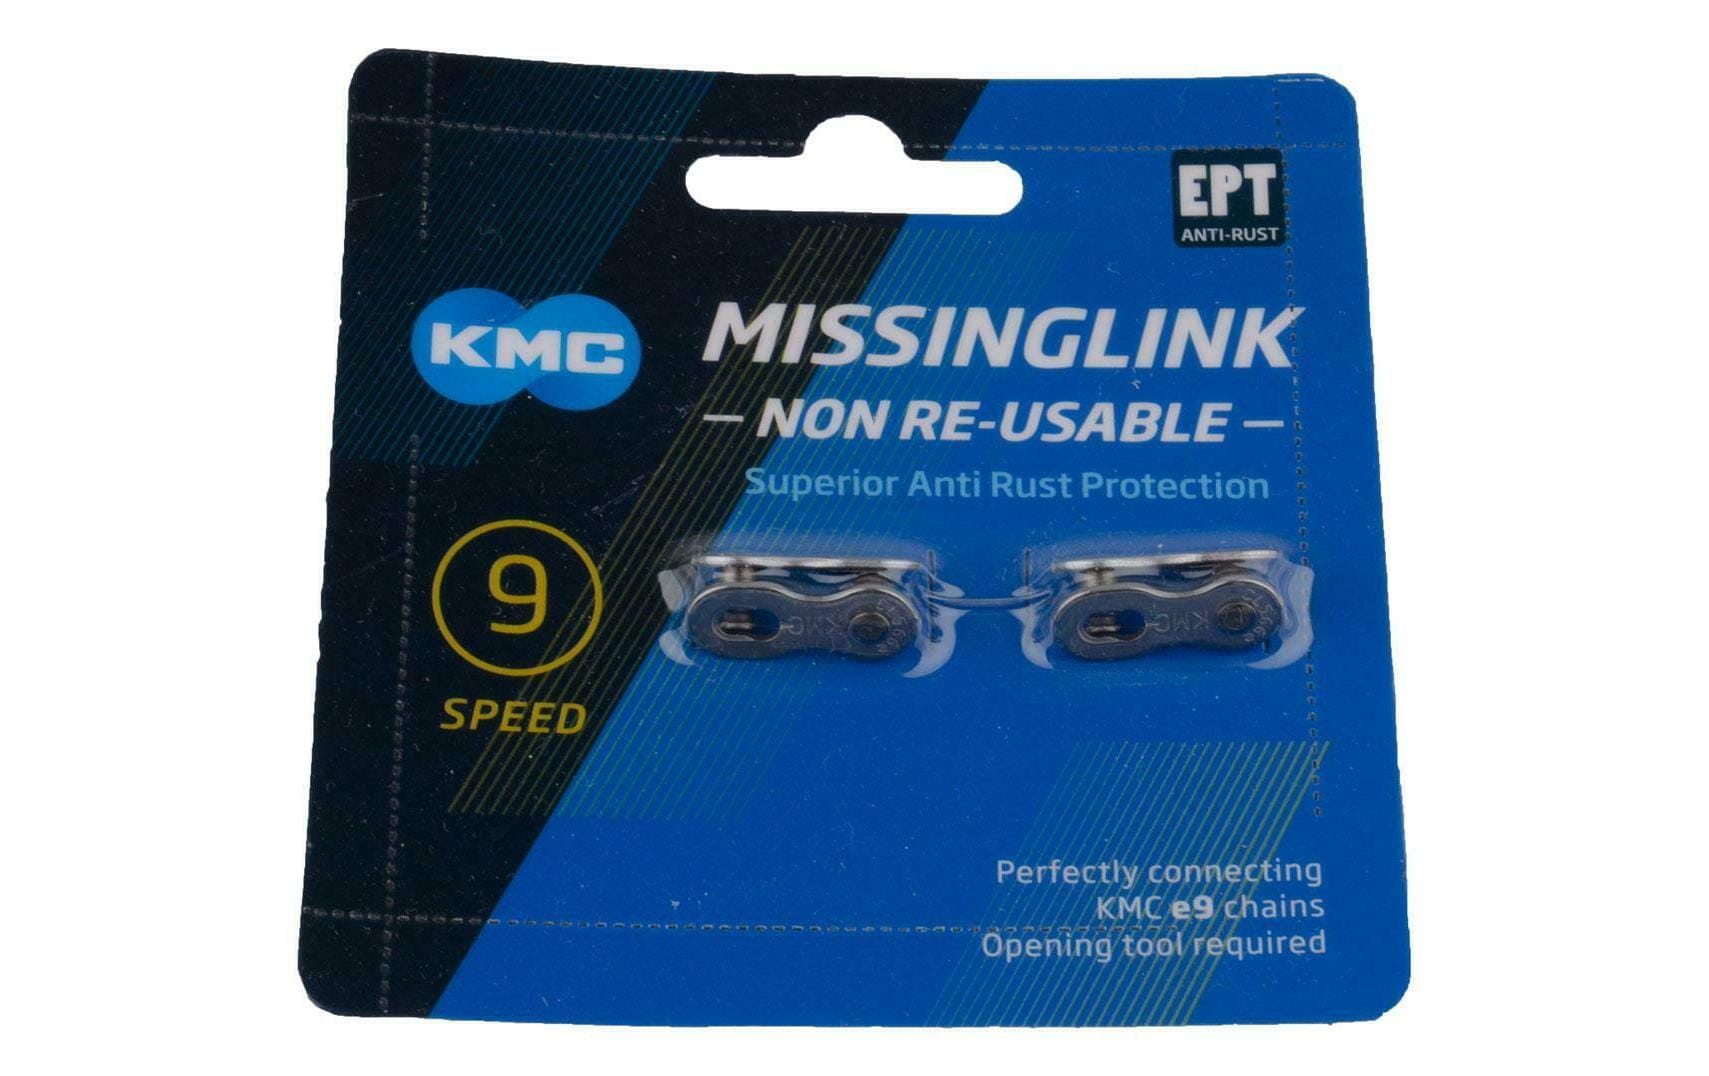 KMC Kettenschloss MissingLink 9NR EPT (e9) 2pcs/Card